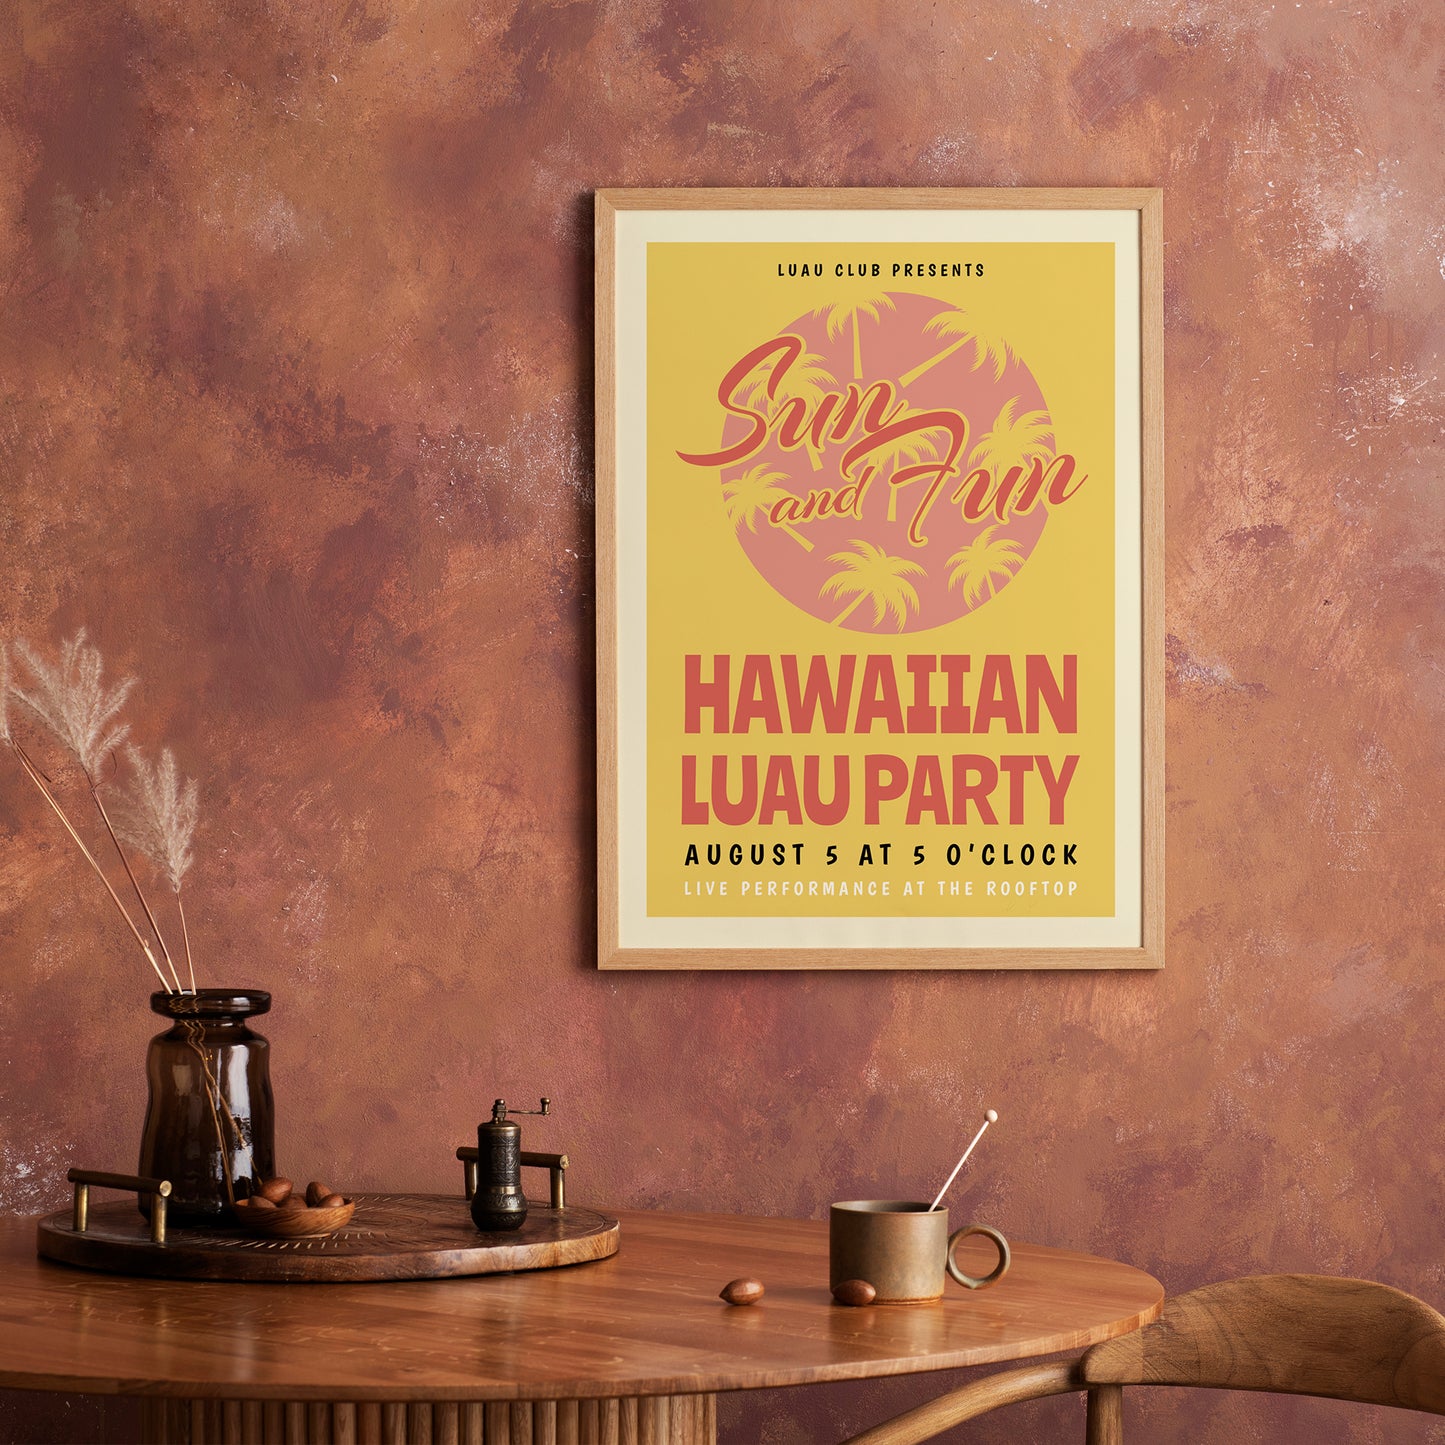 Hawaiian Luau Party Poster